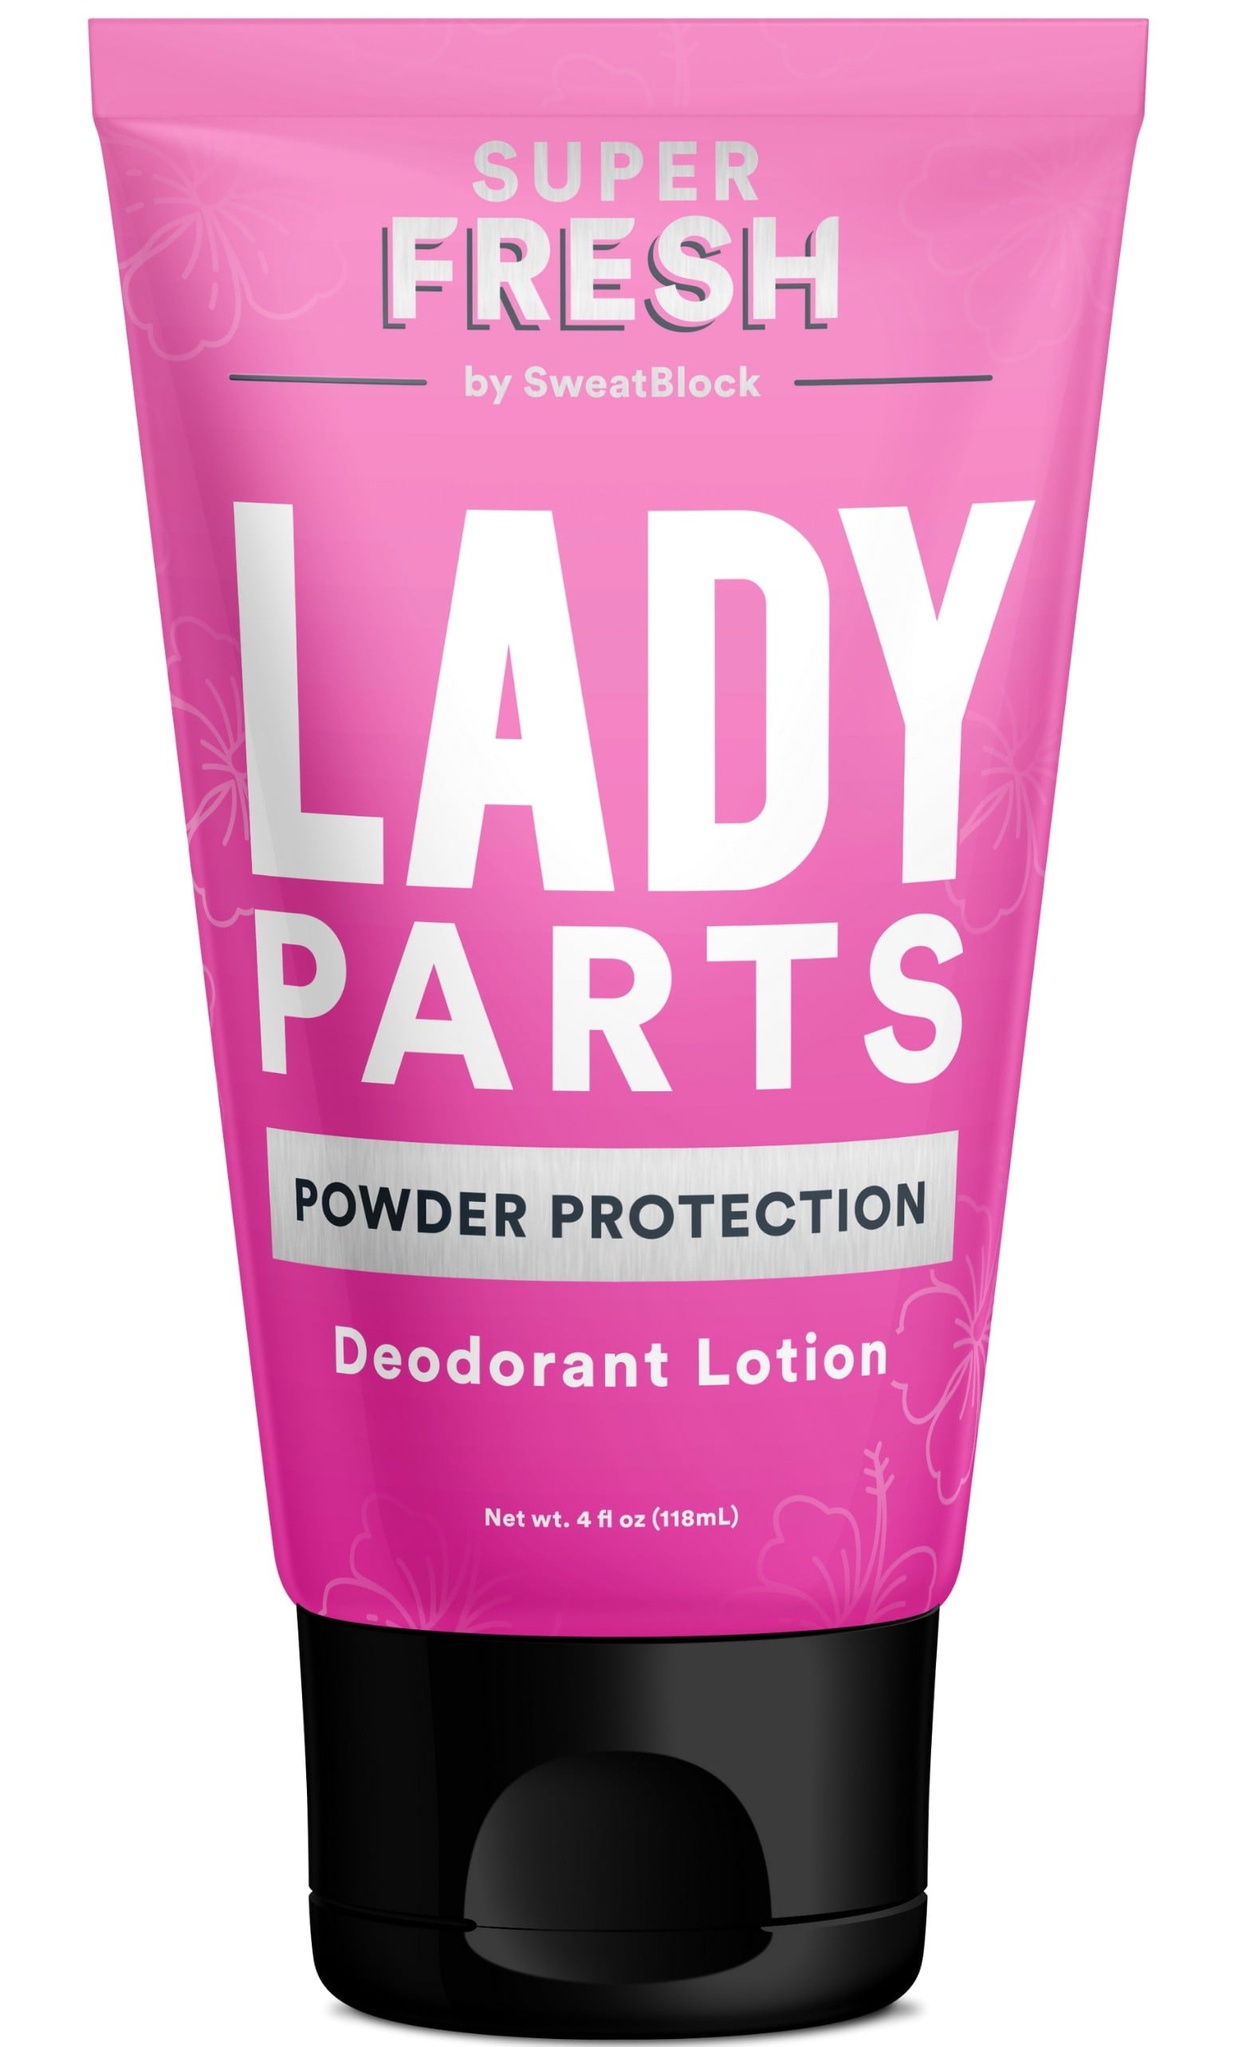 Superfresh Lady Parts Deodorant Lotion - Powder Protection